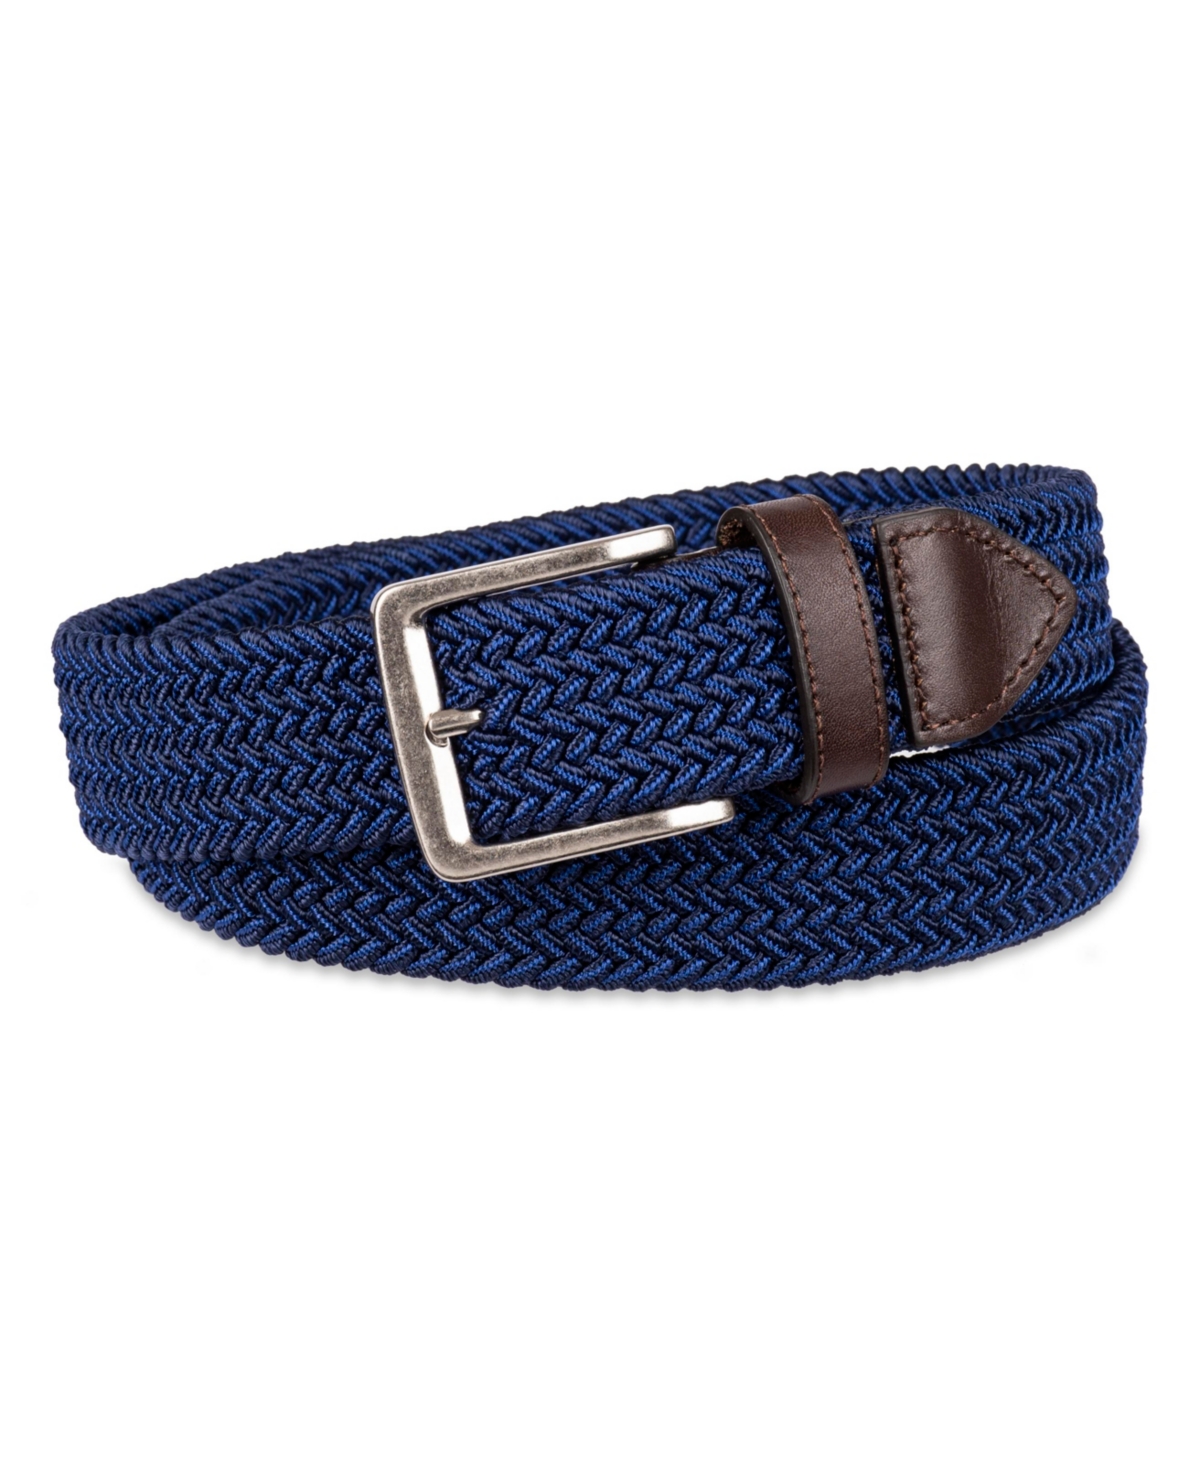 Men's Two-Tone Stretch Braided Web Belt - Navy Blue